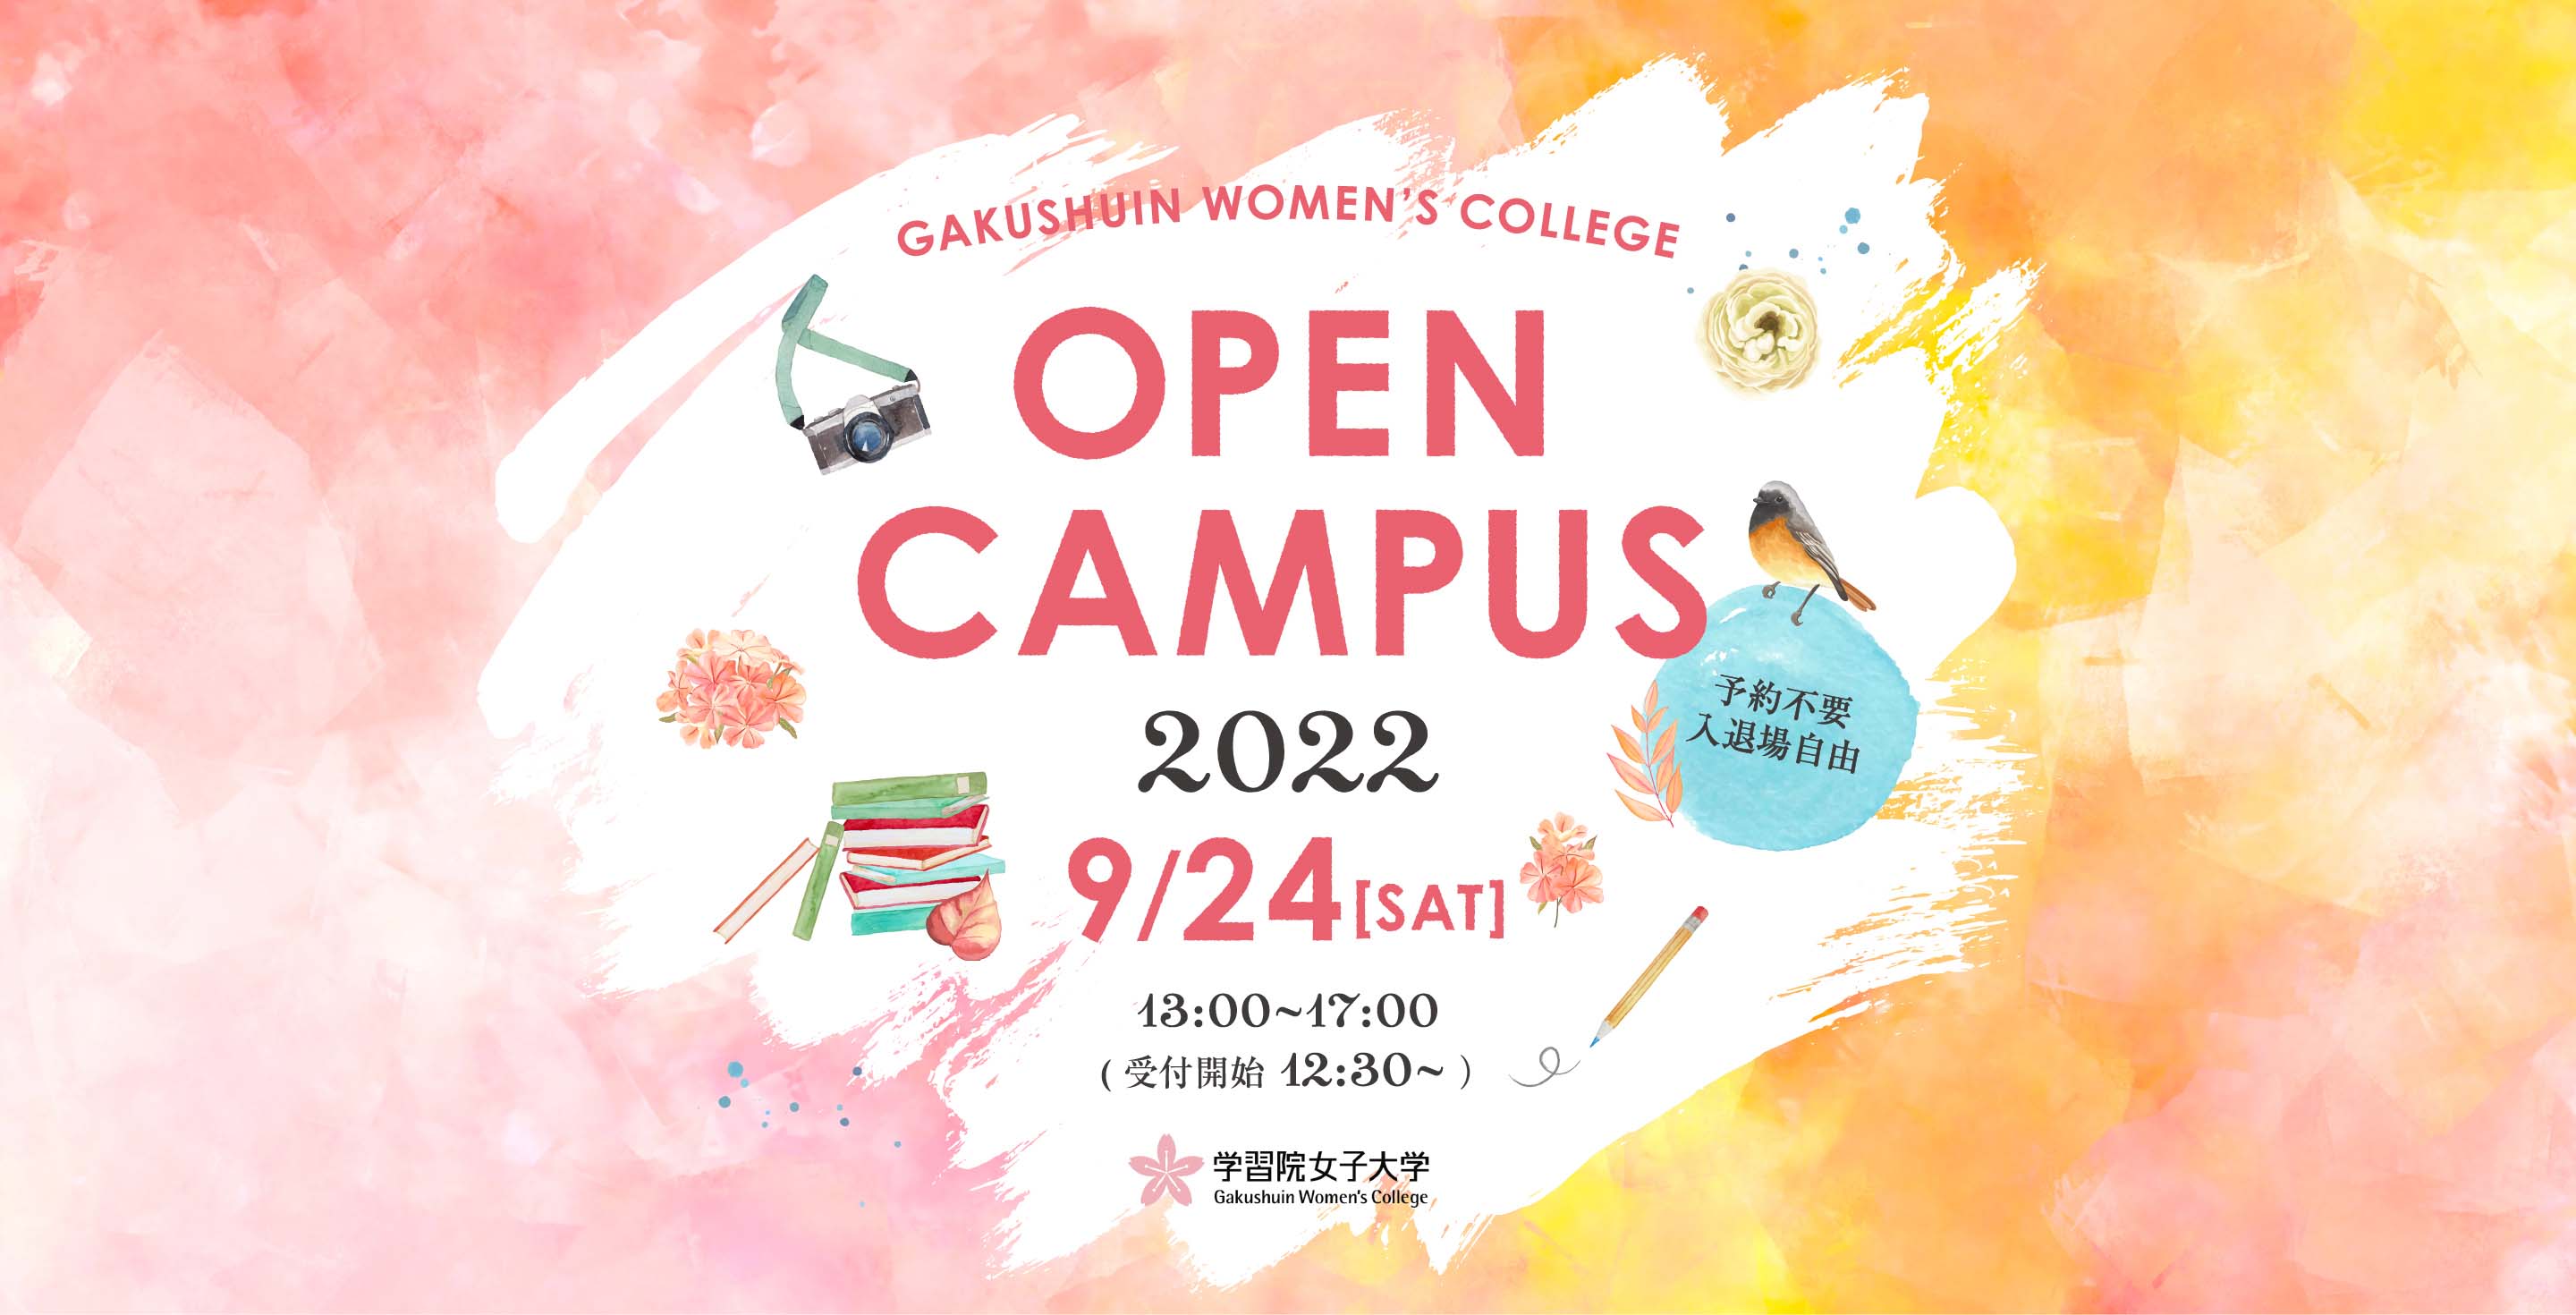 OPEN CAMPUS 2022 9/24(SAT) 学習院女子大学